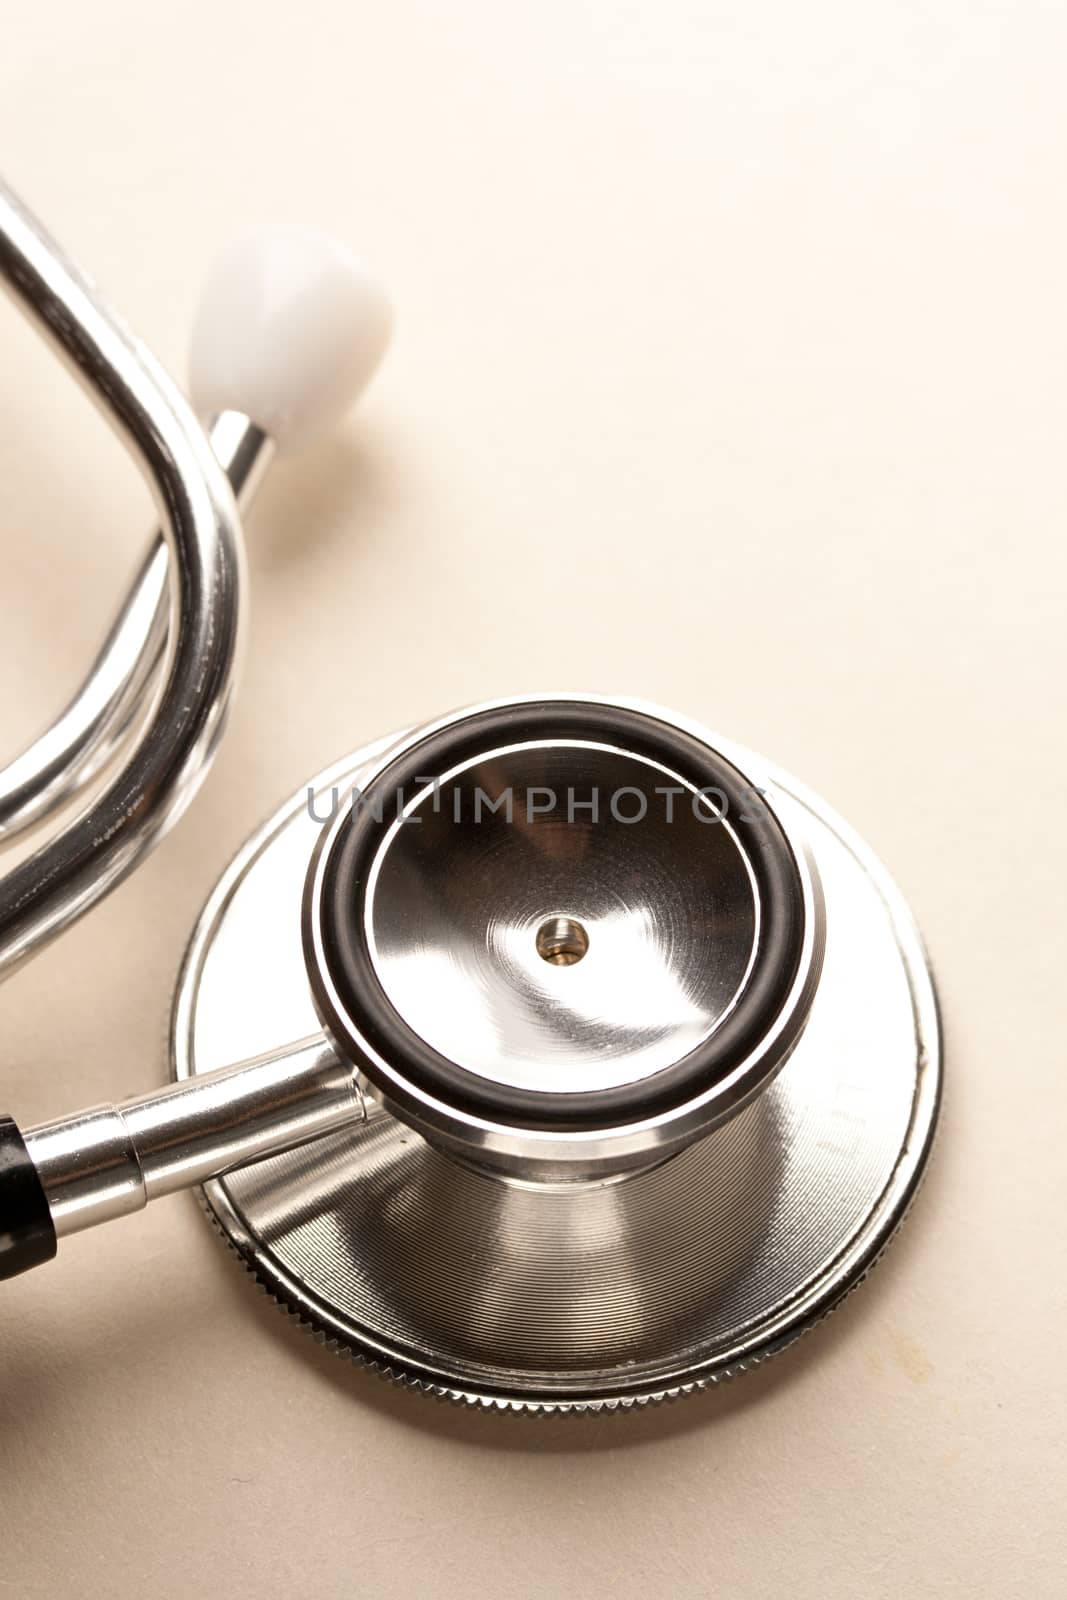 Stethoscope closeup